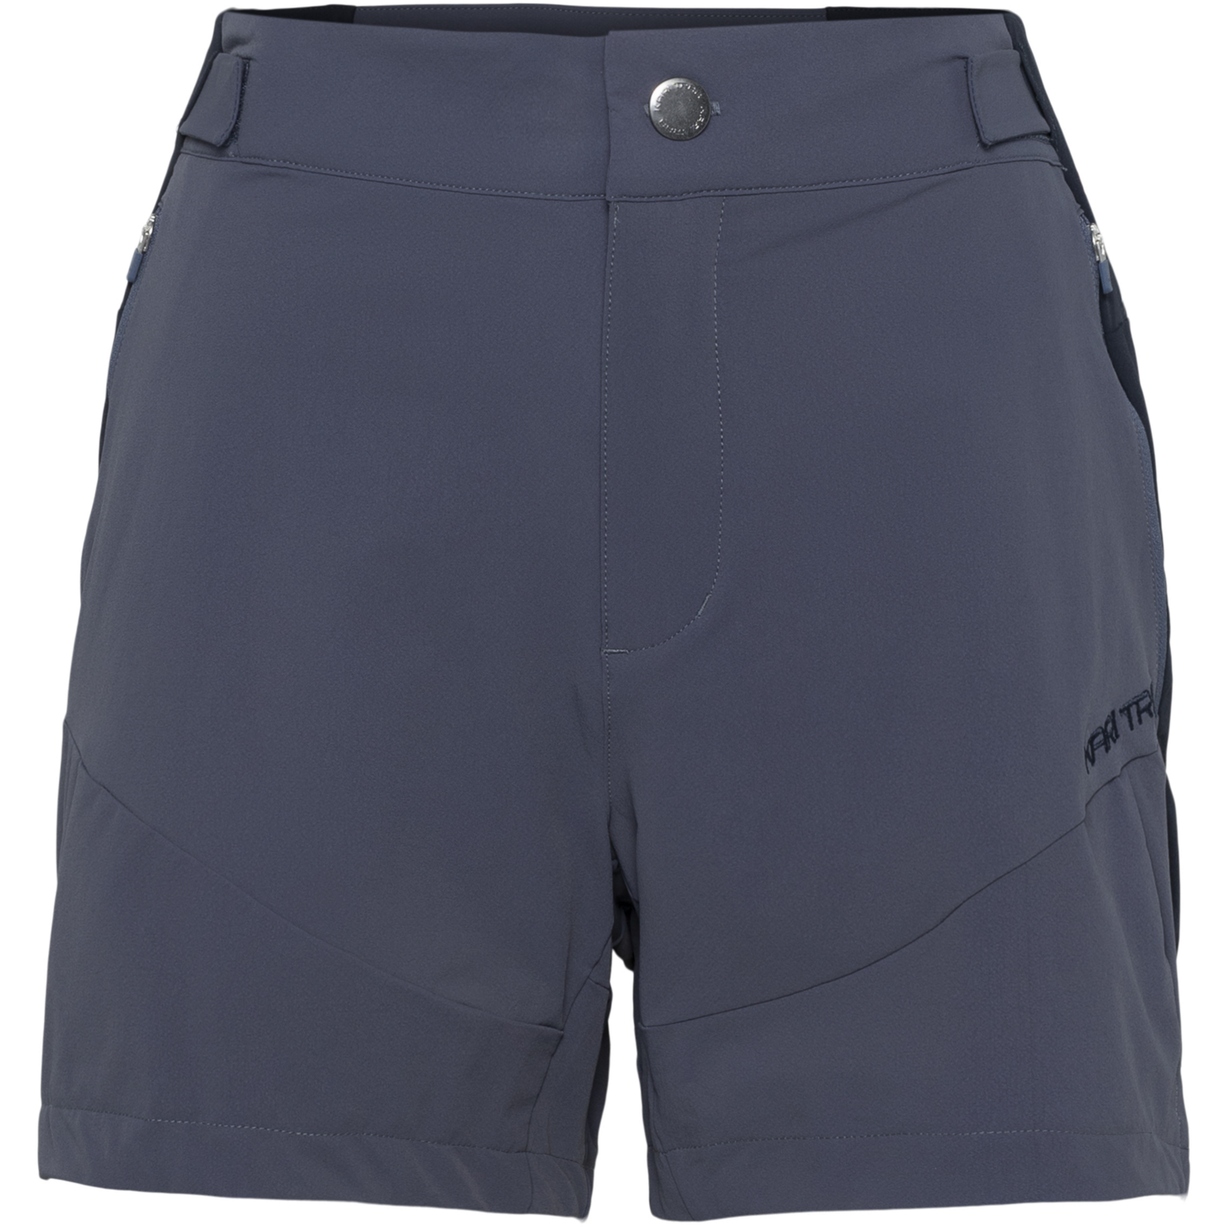 Productfoto van Kari Traa Henni 5 Inch Shorts Dames - dusty midtone blue